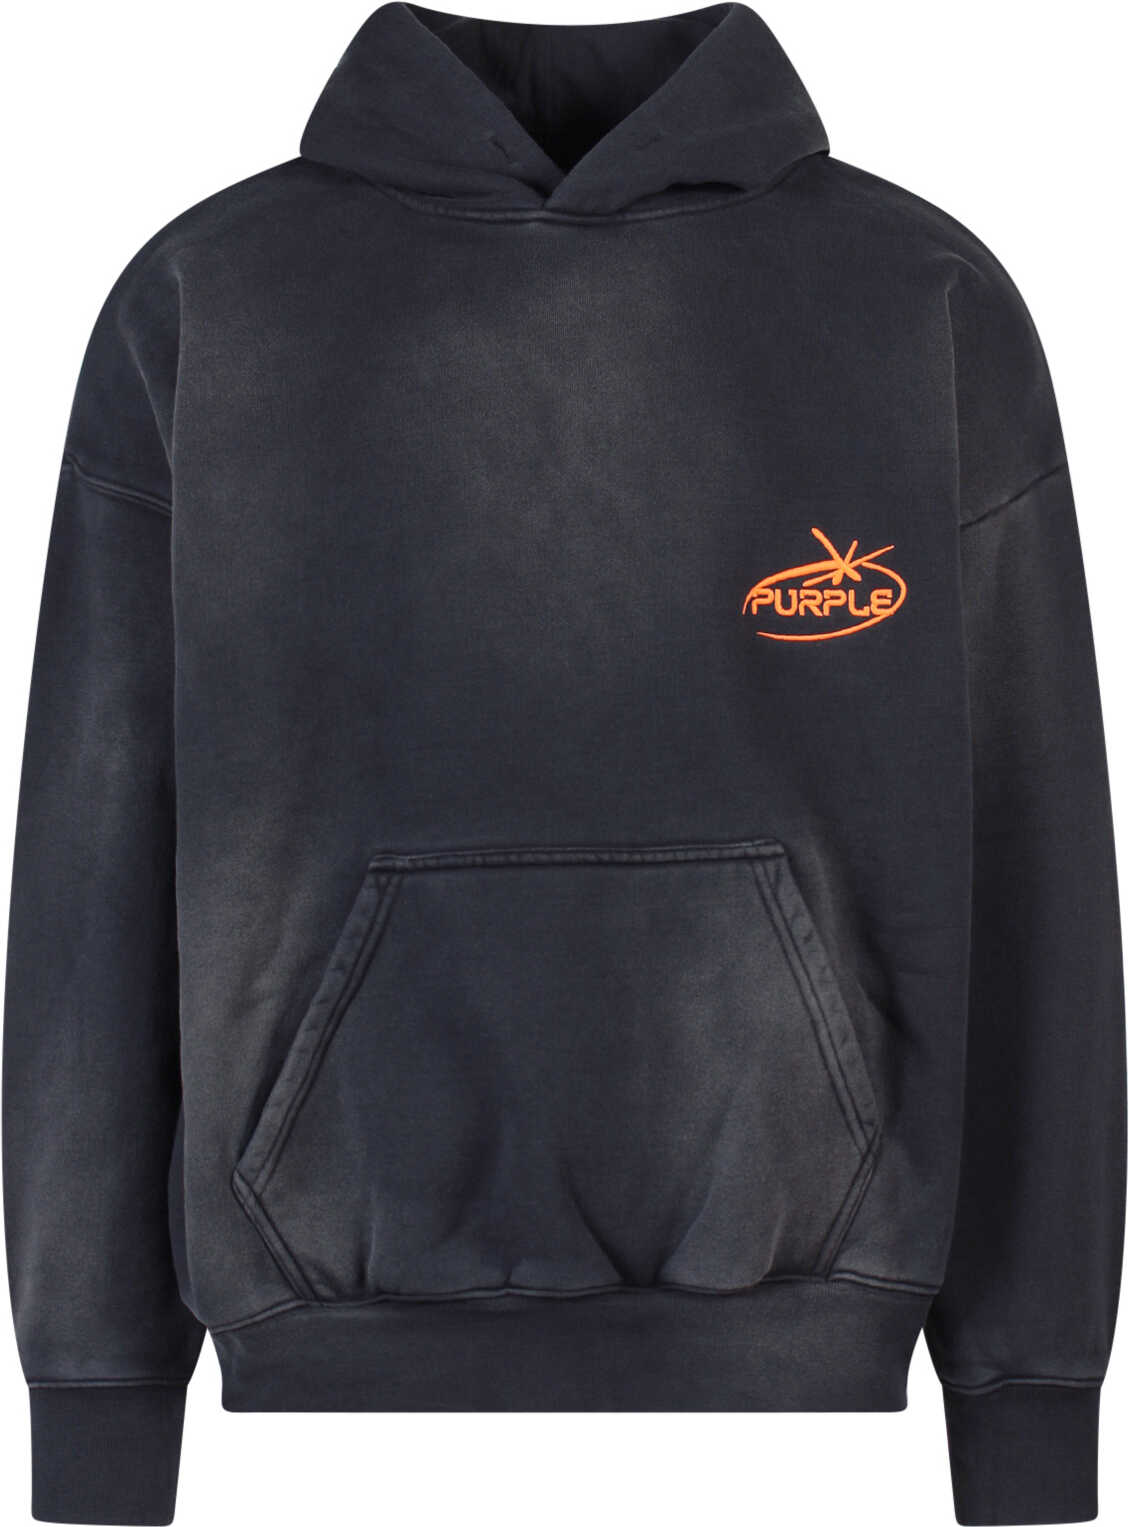 PURPLE BRAND Sweatshirt Black